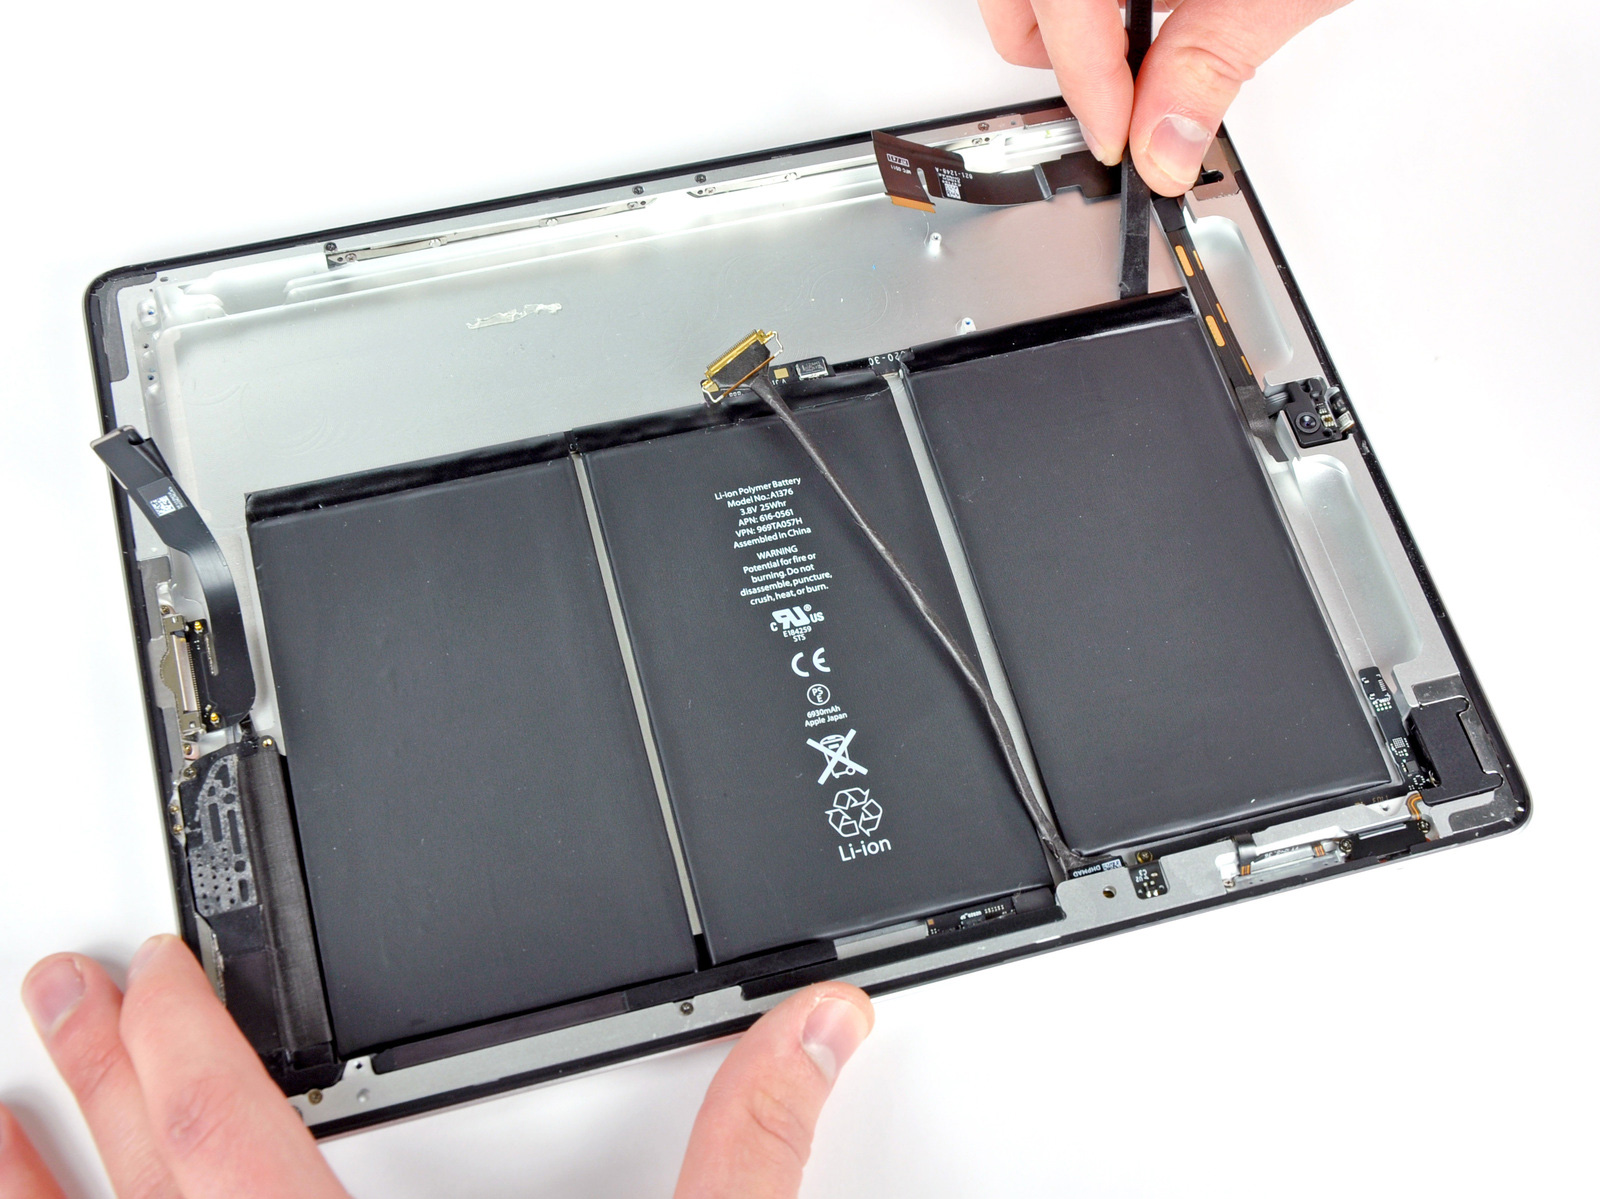 Uitreiken Nevelig Matig Battery Life - The Apple iPad 2 Review